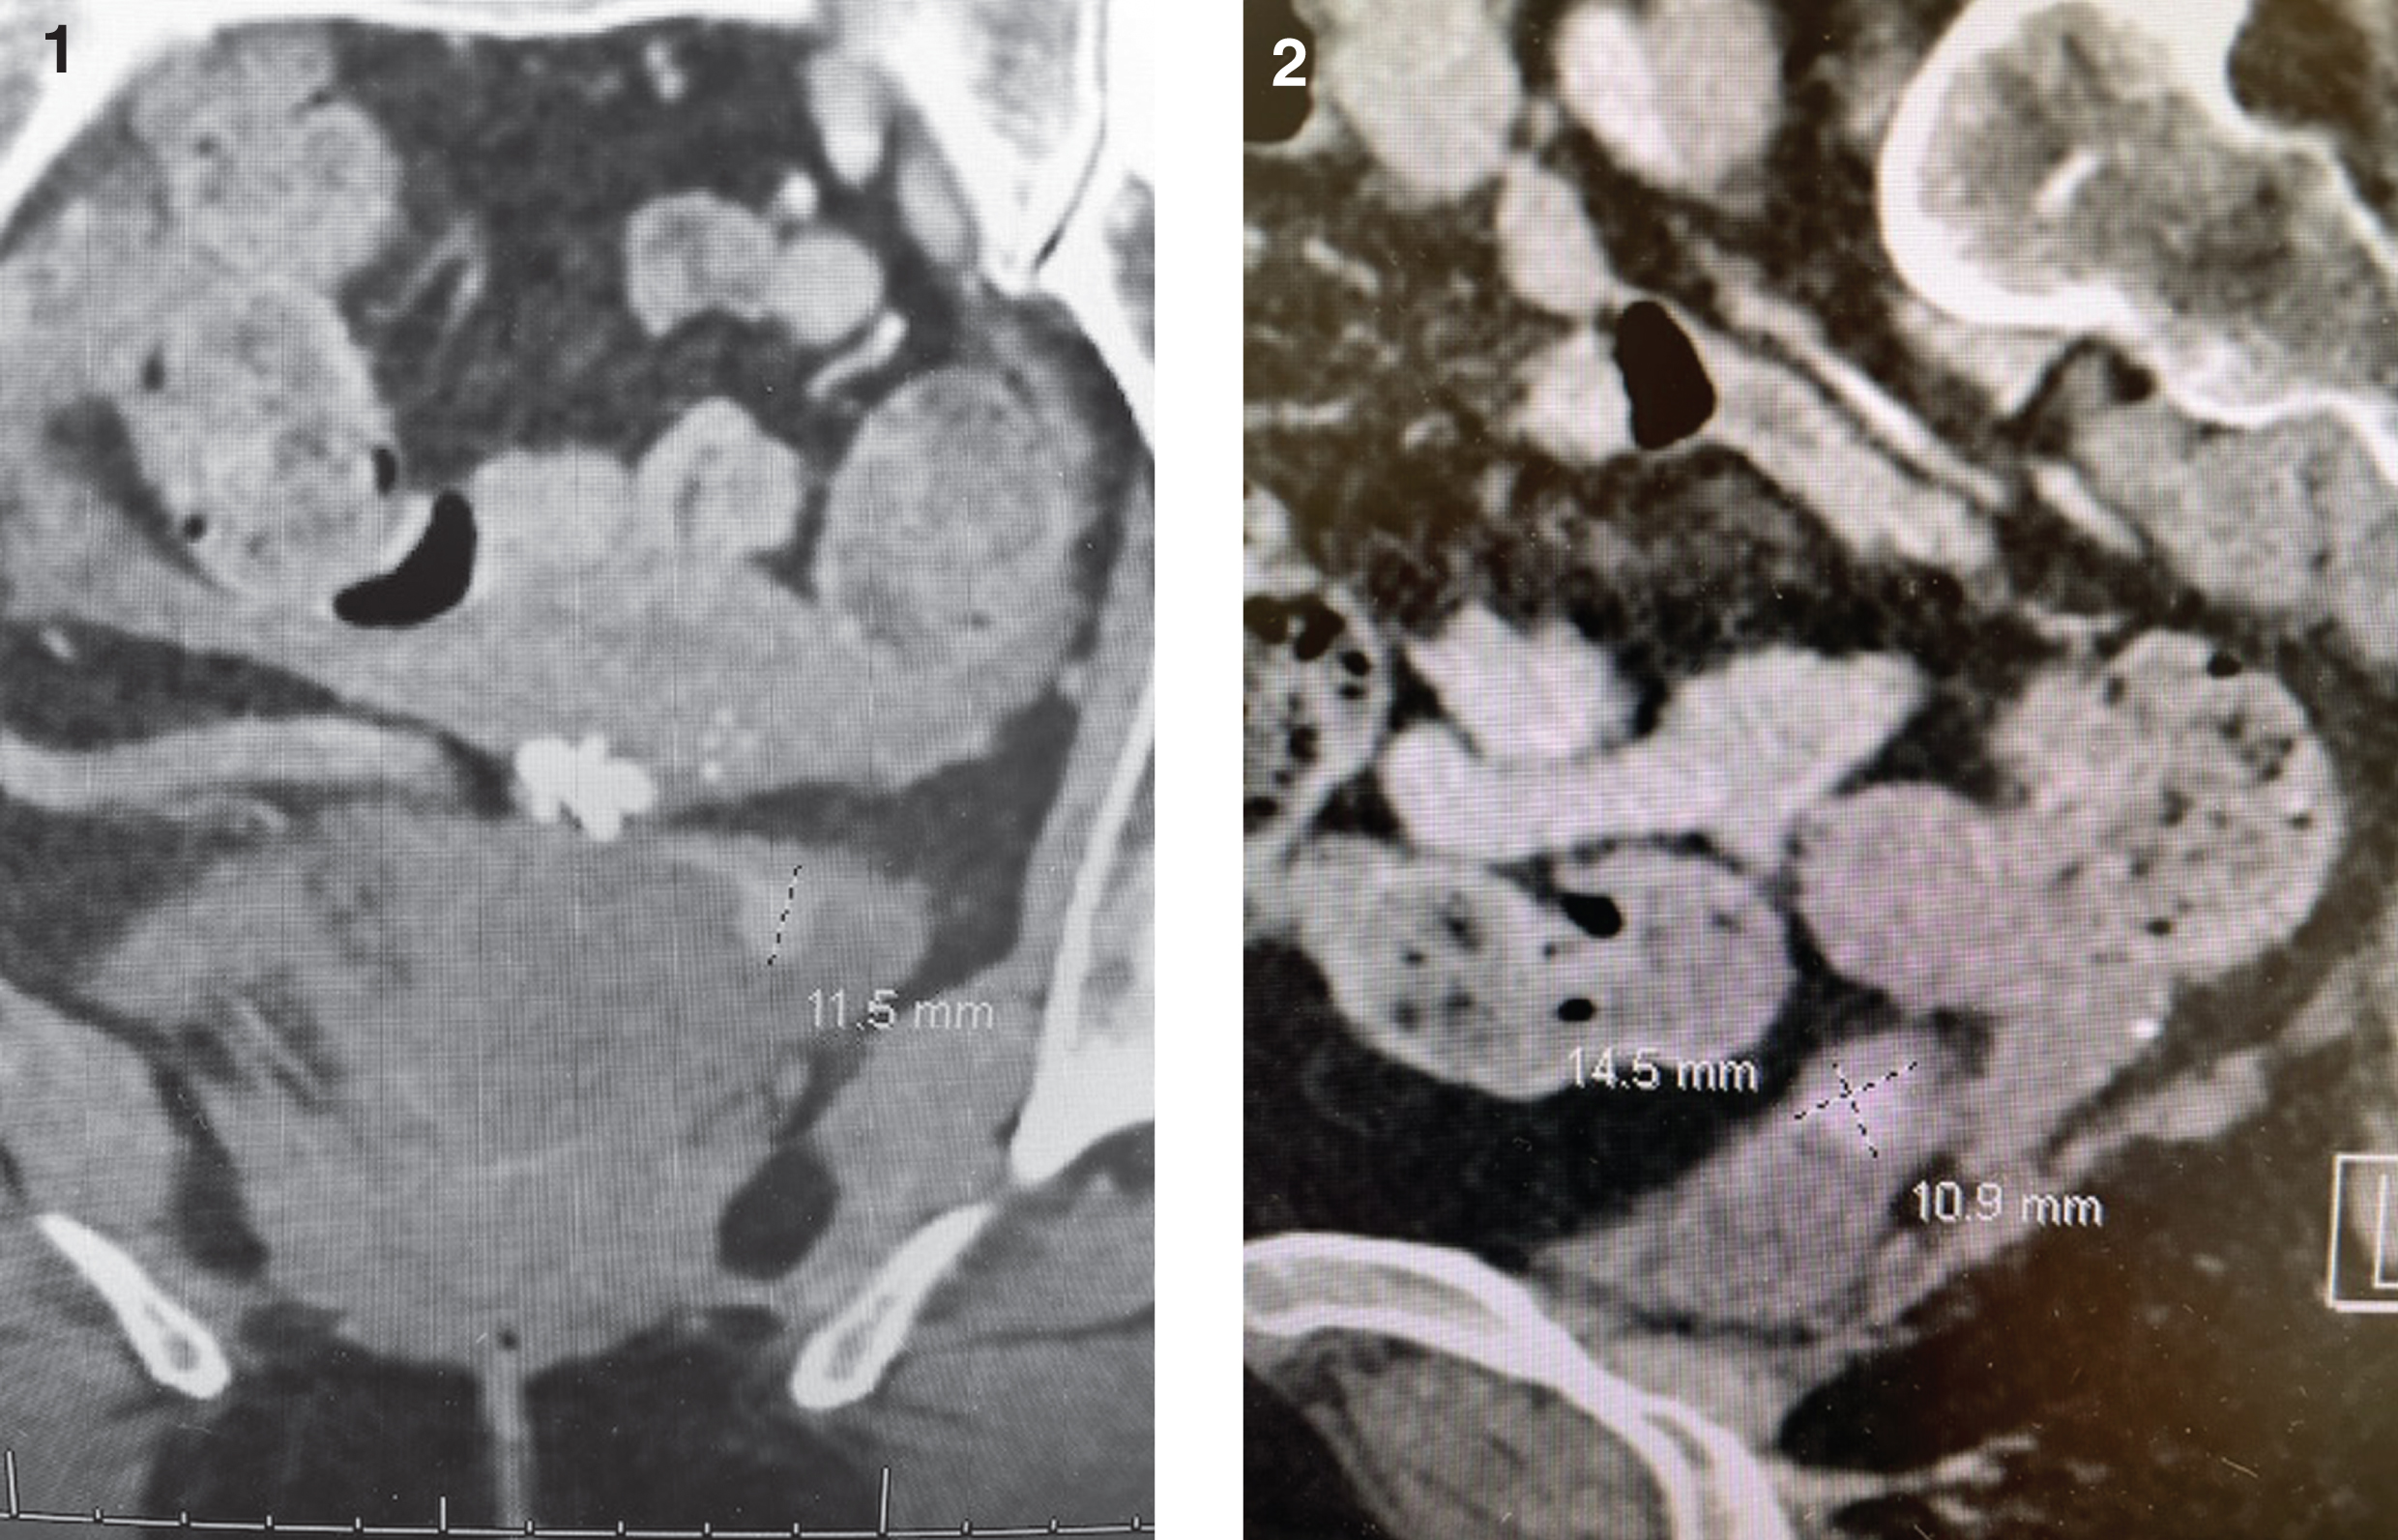 Coronal and sagital planes identifying the small bladder tumor.